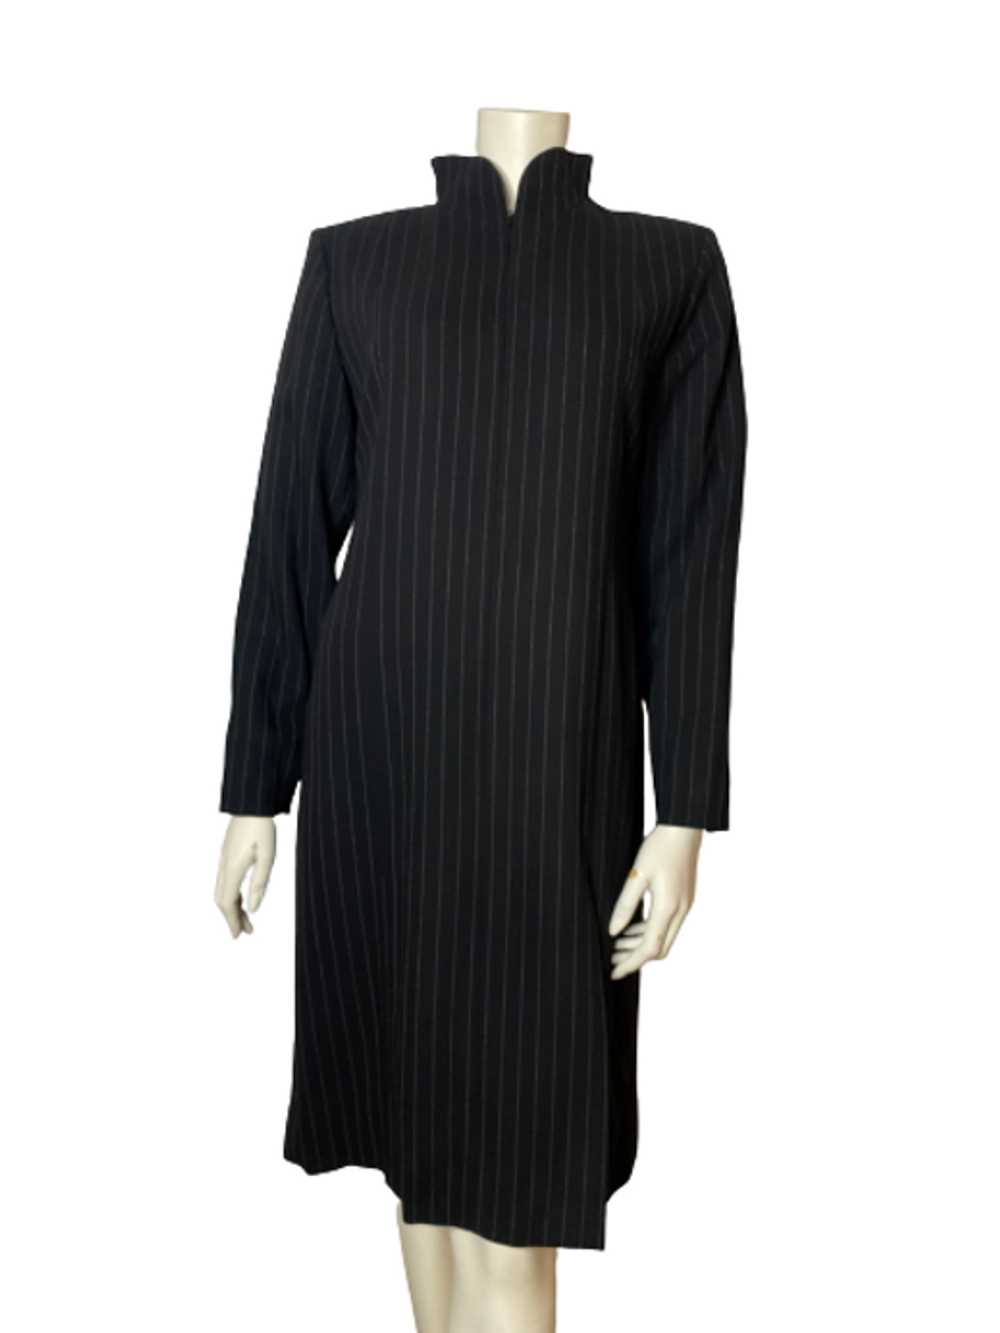 Yves Saint Laurent black striped dress - image 1